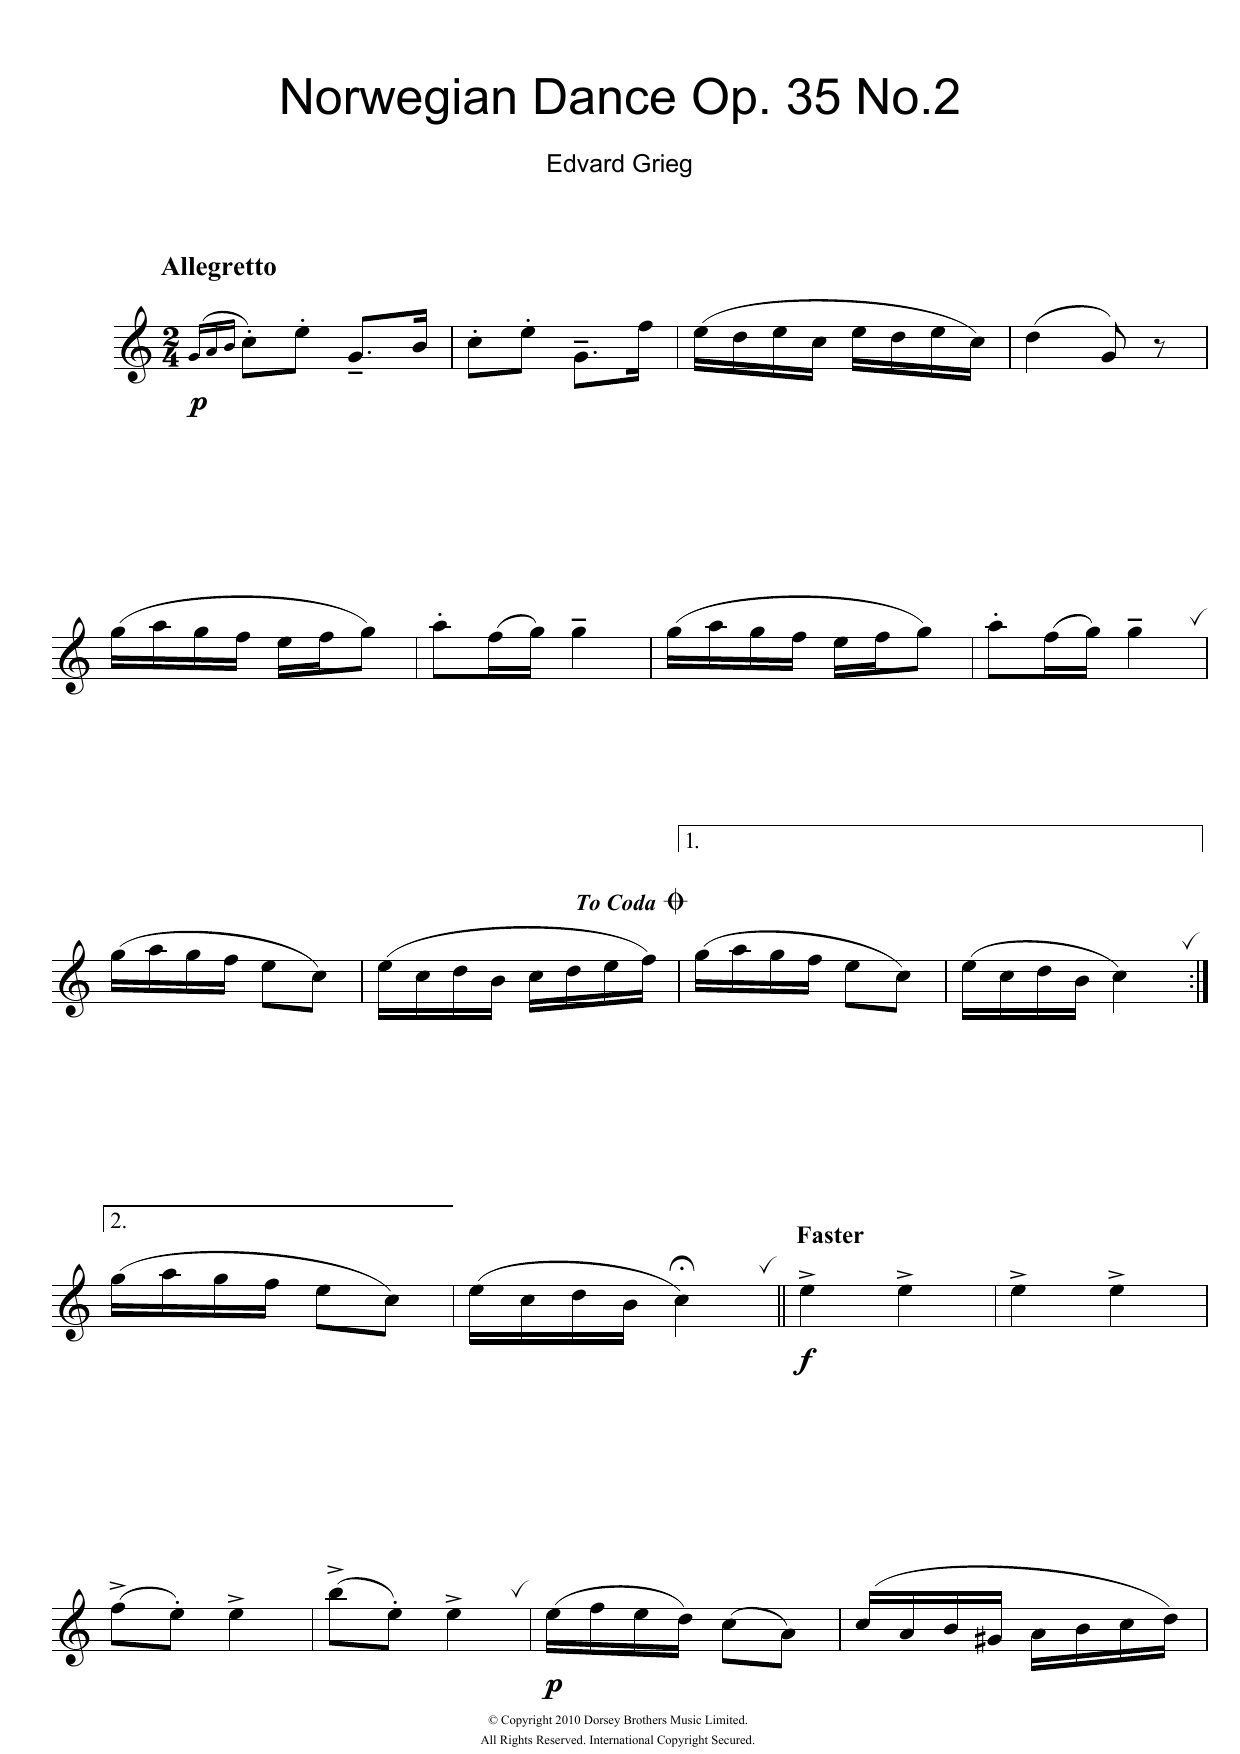 Edvard Grieg Norwegian Dance No. 2 Op. 35 Sheet Music Notes & Chords for Alto Saxophone - Download or Print PDF